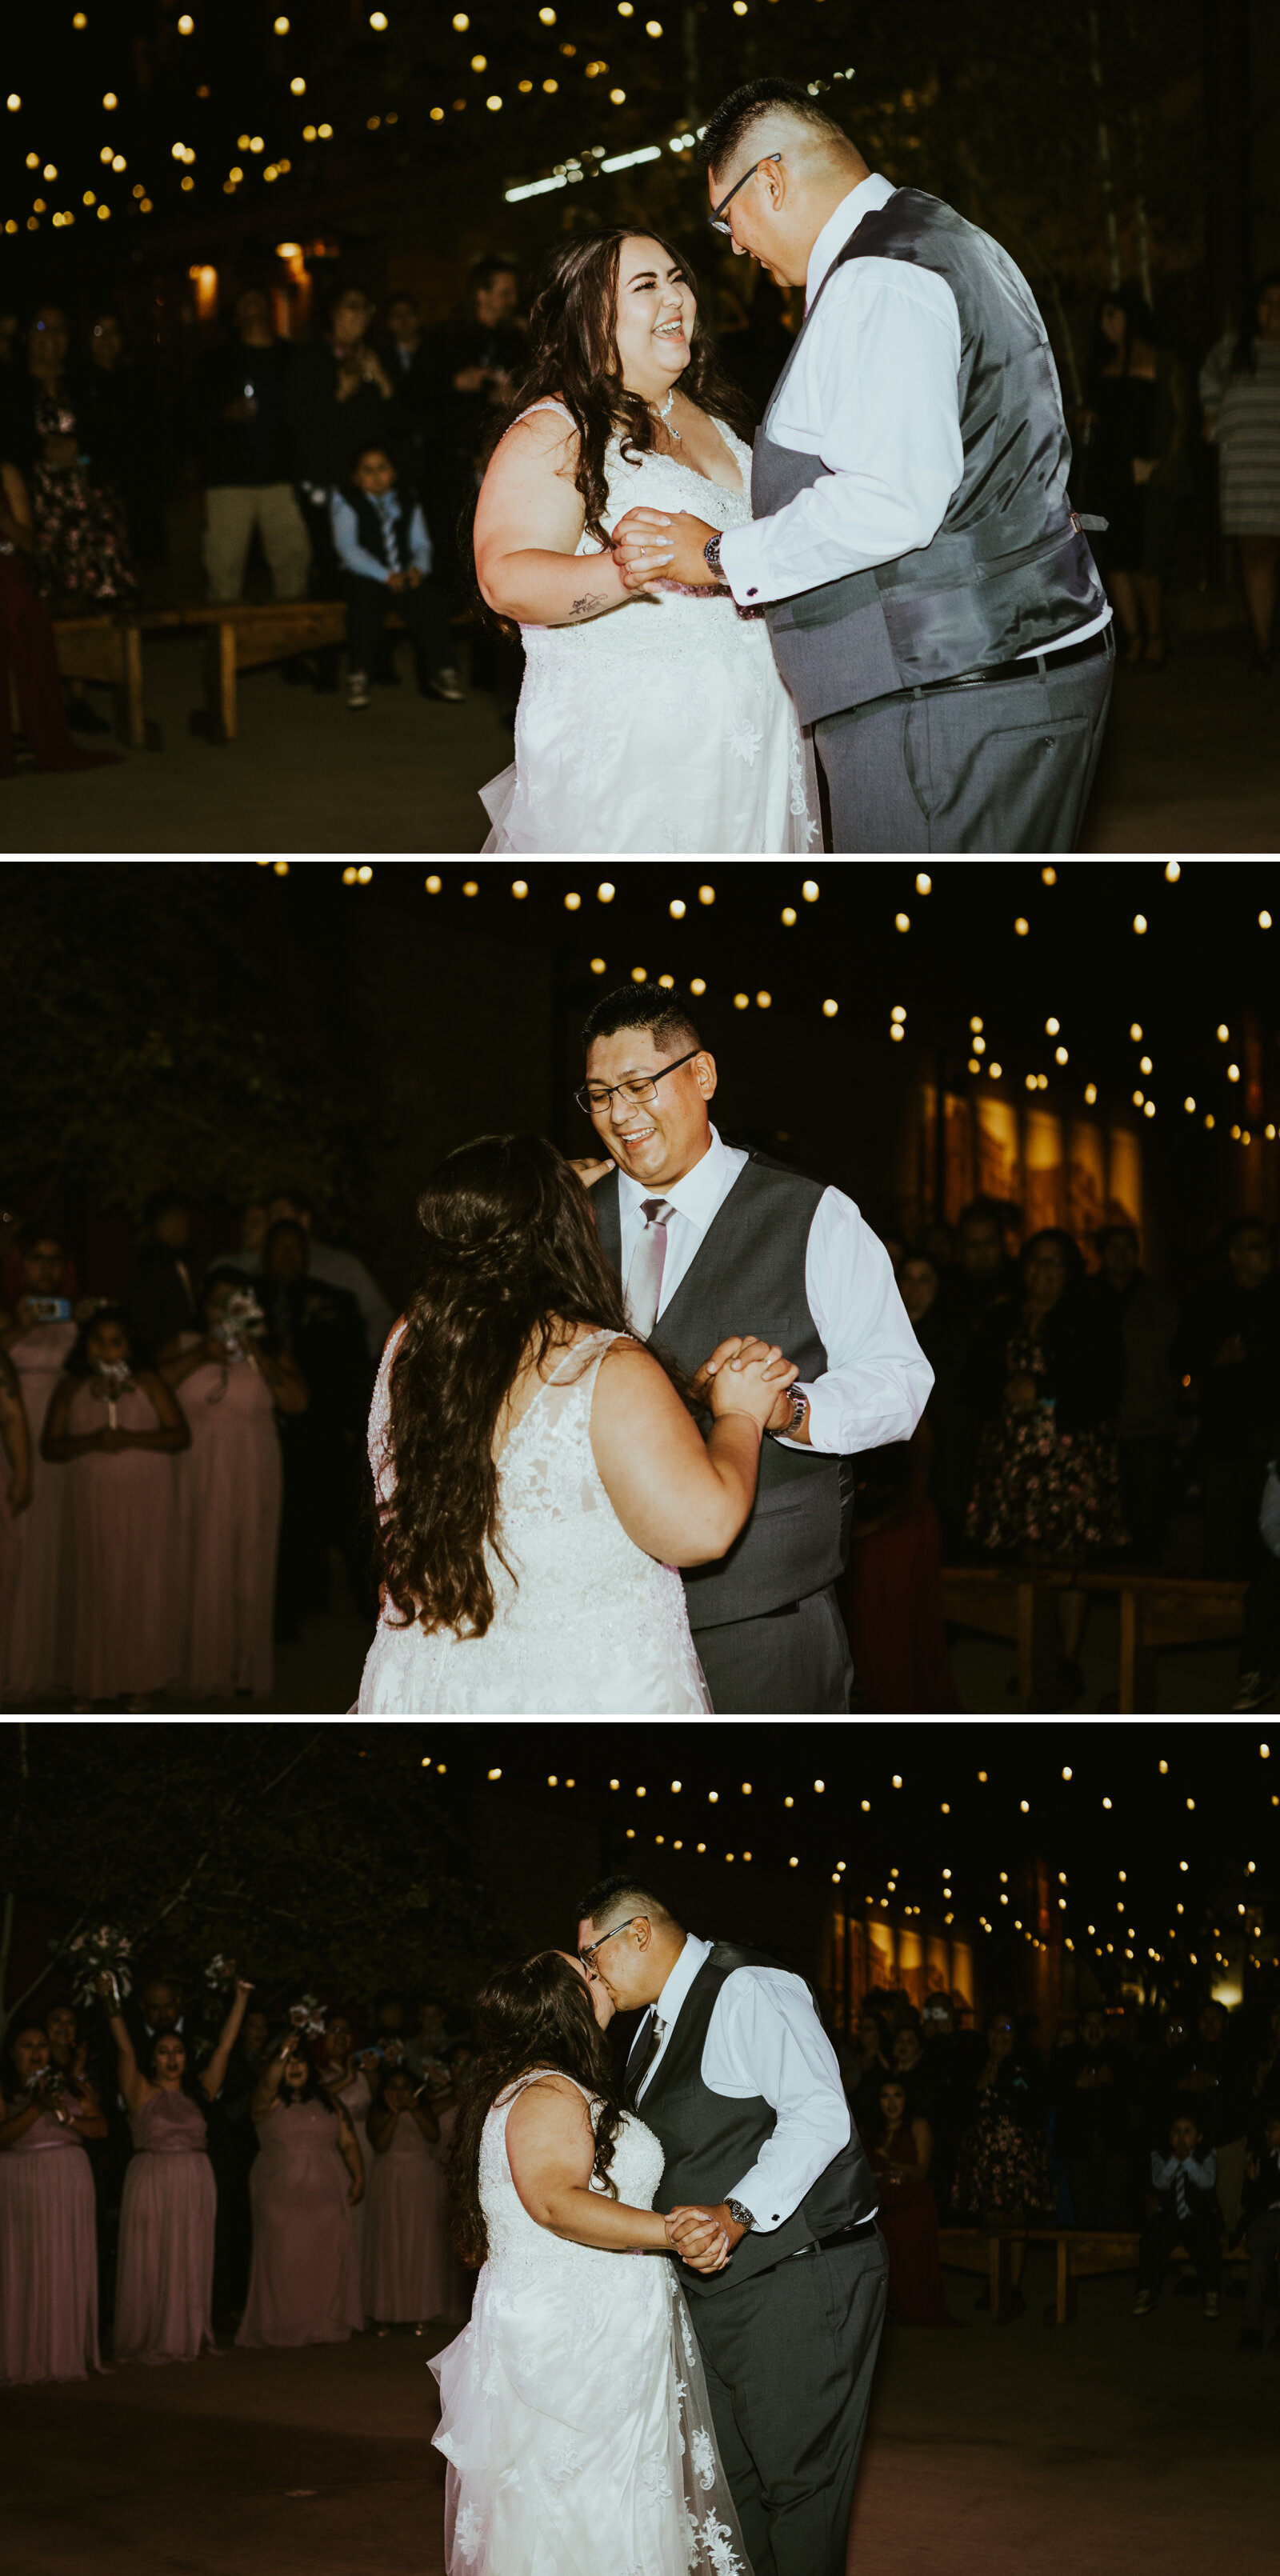 GRAND HIGHLAND HOTEL PRESCOTT ARIZONA WEDDING PHOTOGRAPHY FIRST DANCE.jpg